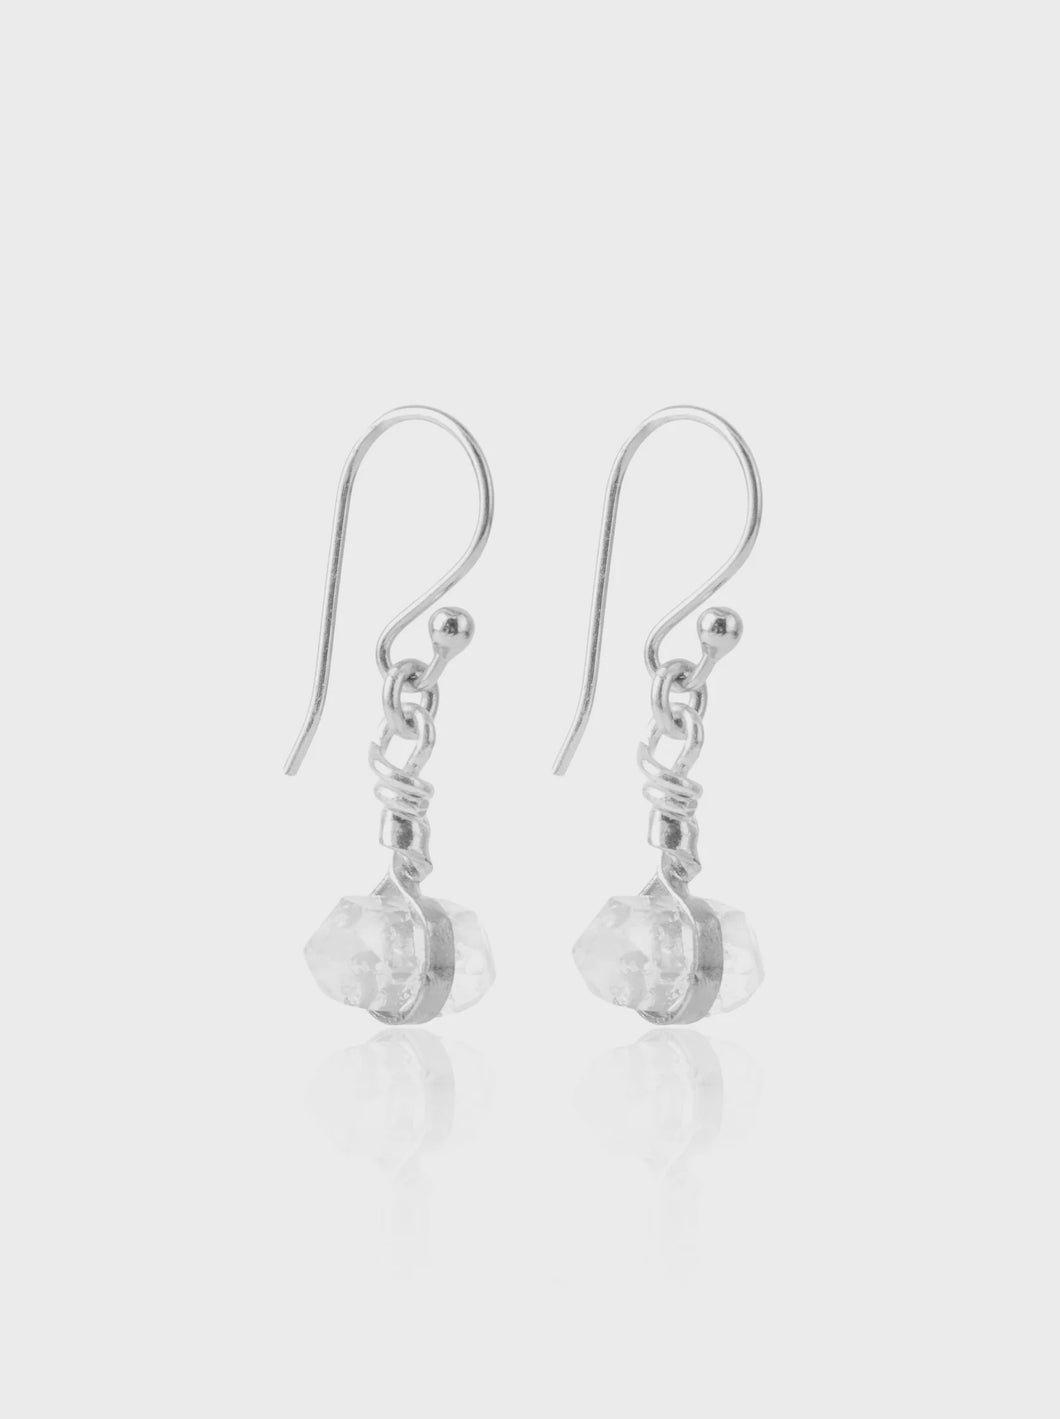 Herkimer Earrings | Drops